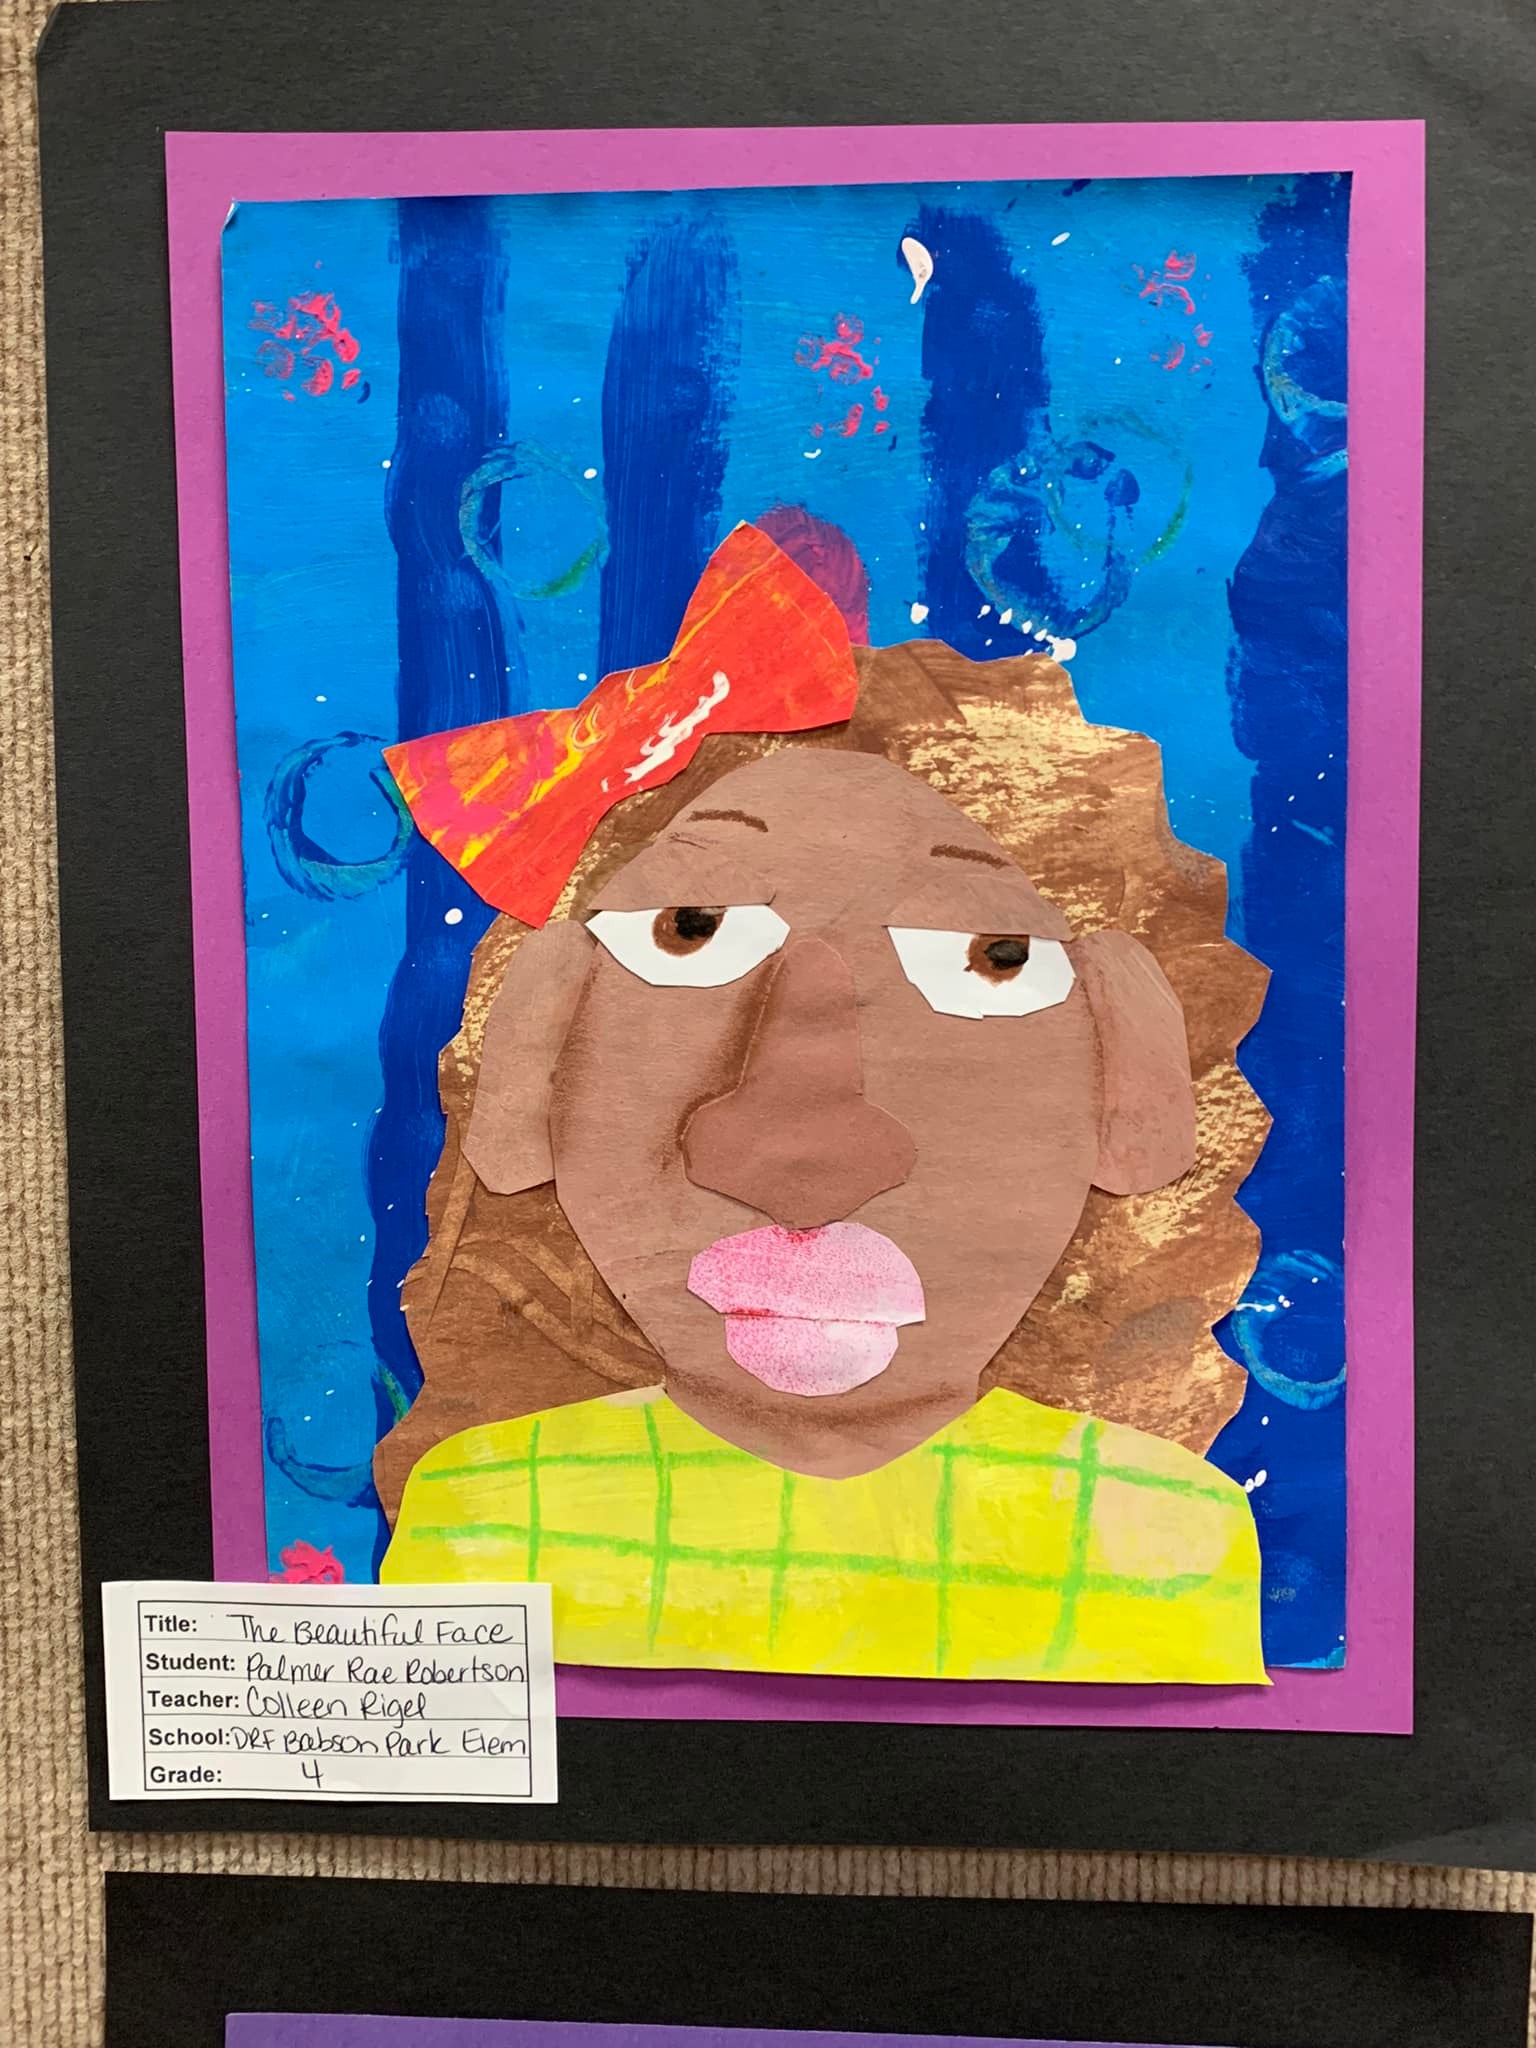 Student art show artwork.